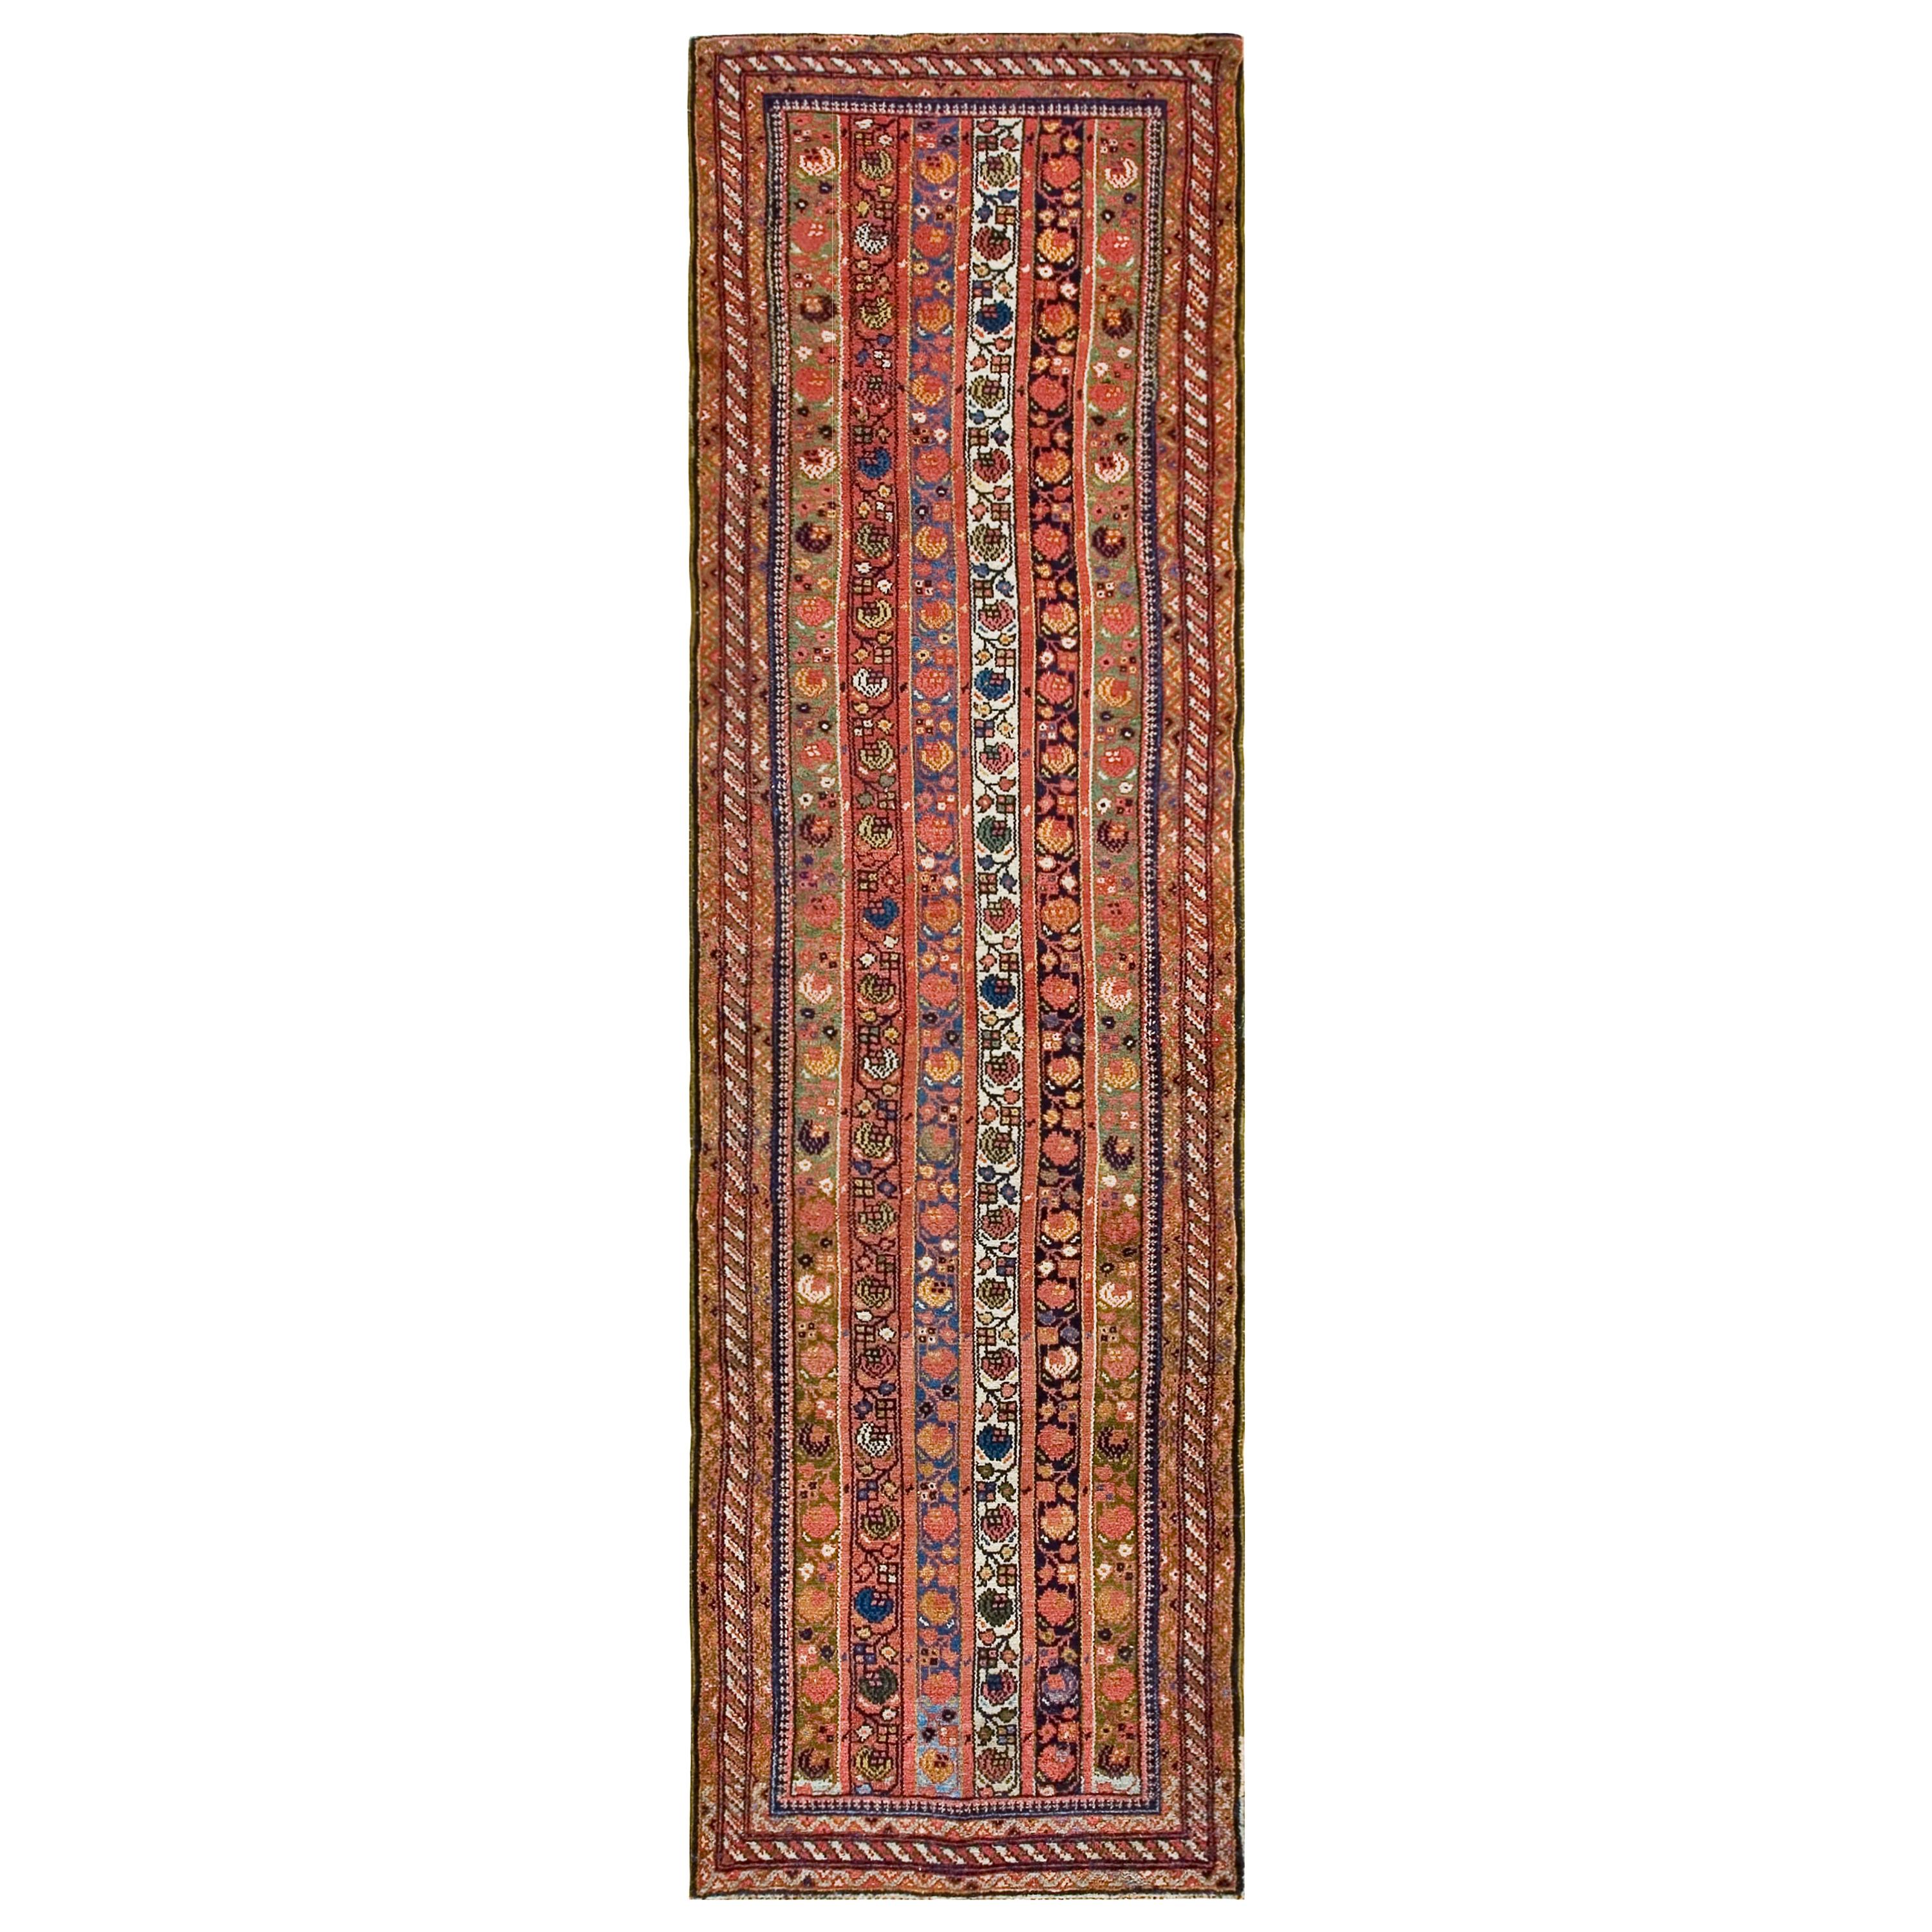 Early 20th Century W. Persian Kurdish Runner Carpet ( 3'5" x 11'8" - 104 x 356 )